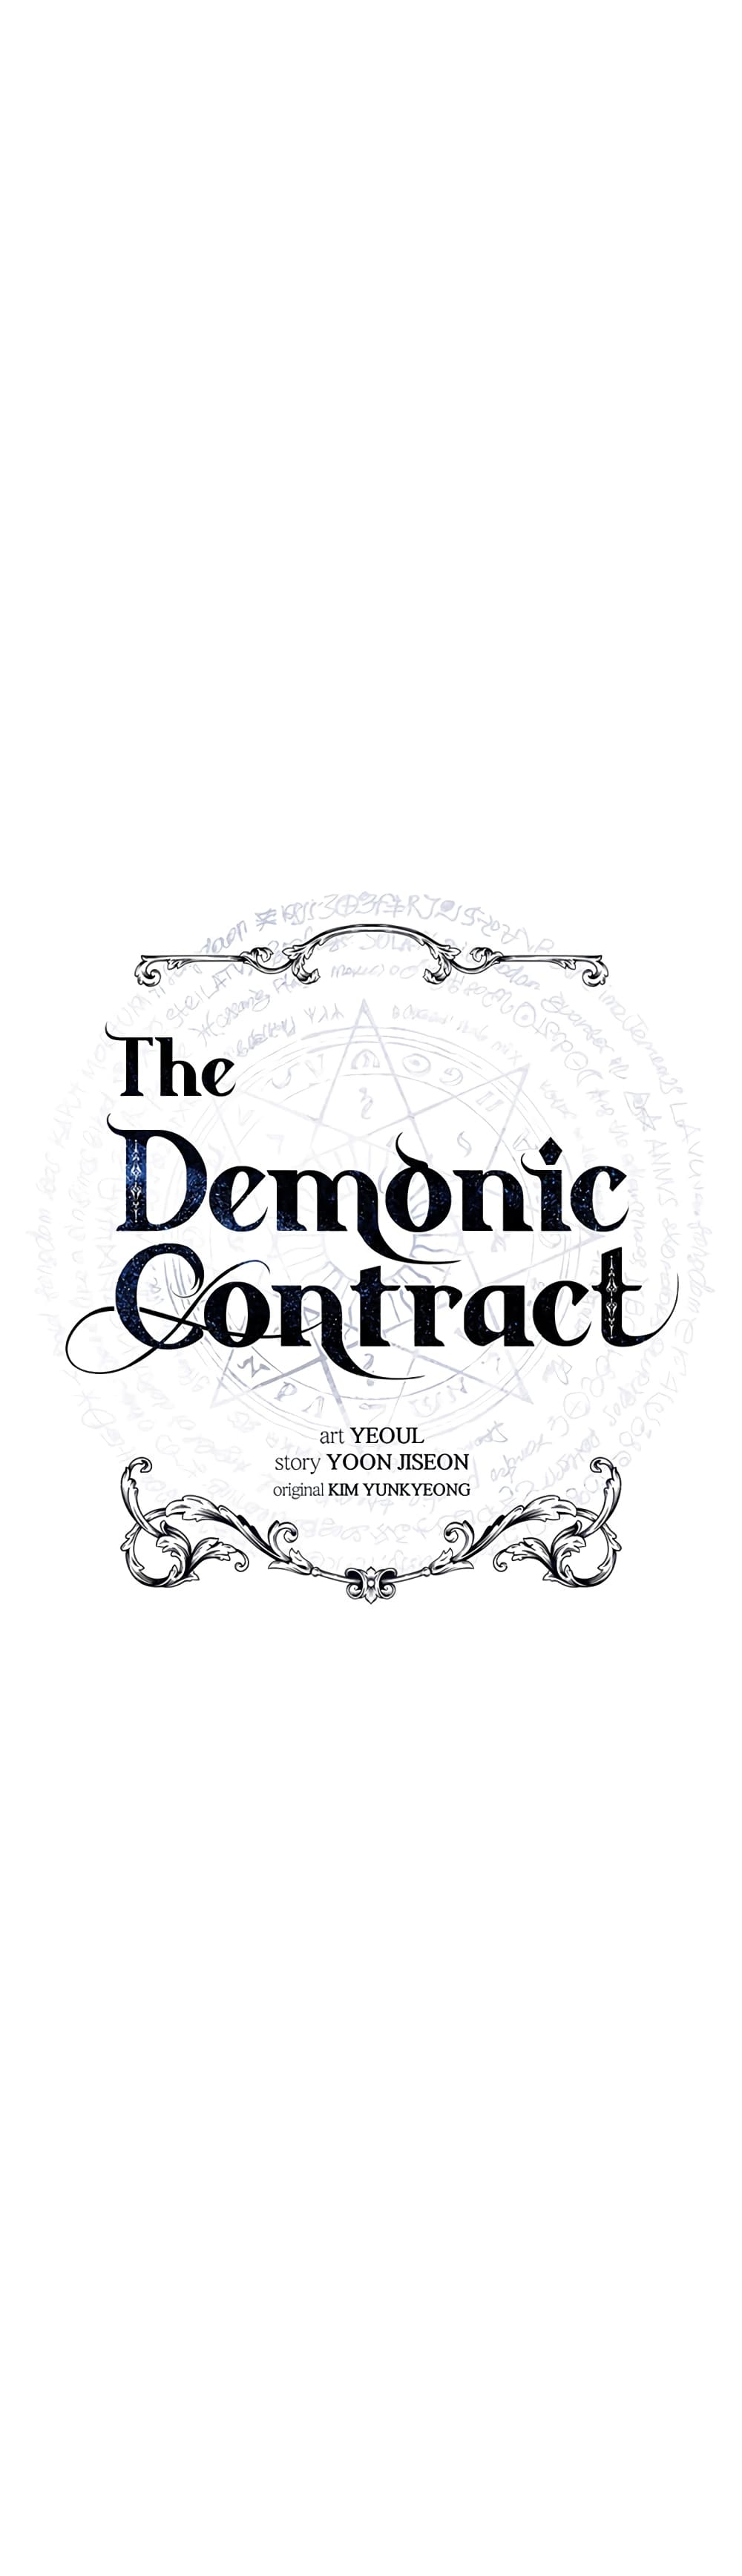 The Demonic Contract 42 03